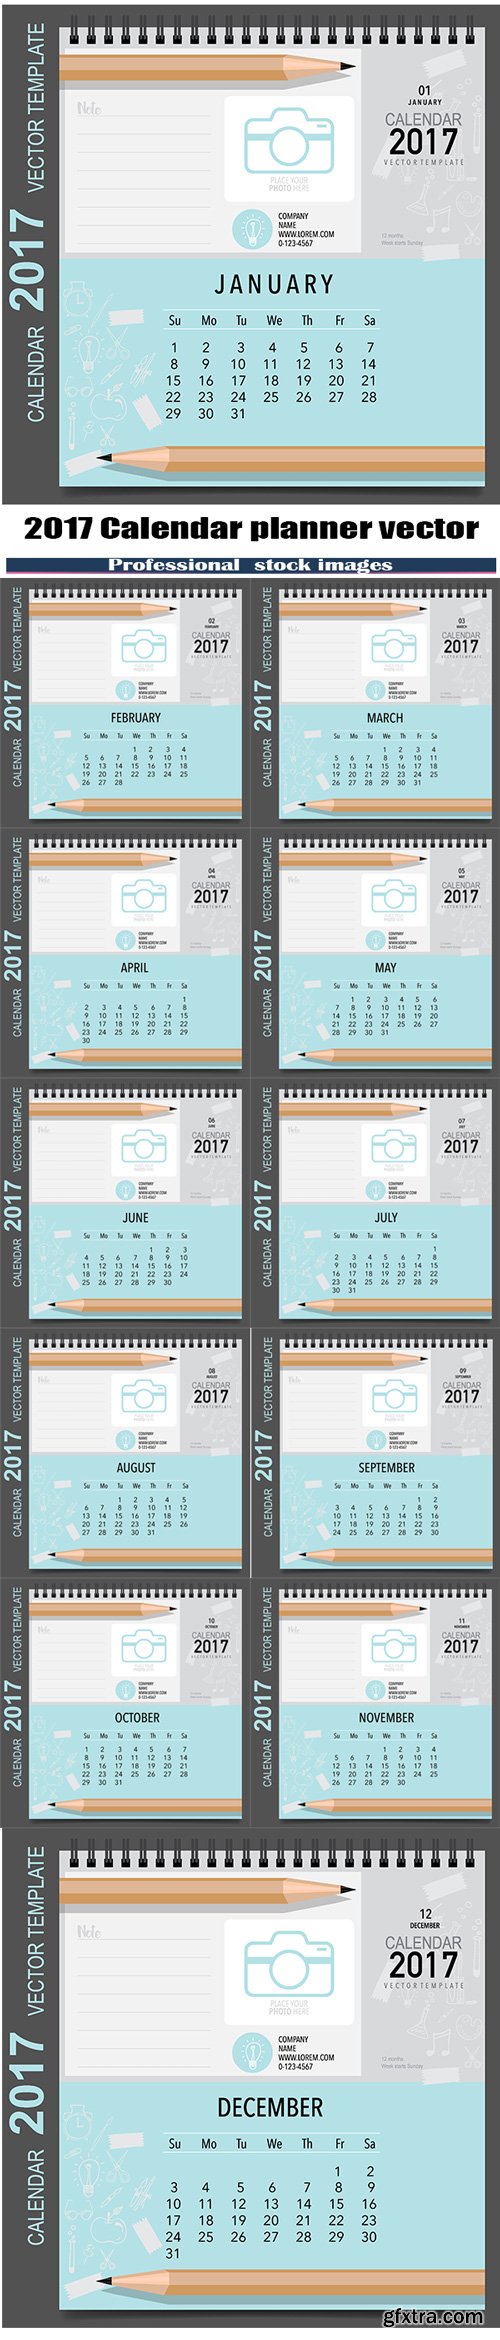 2017 Calendar planner vector design